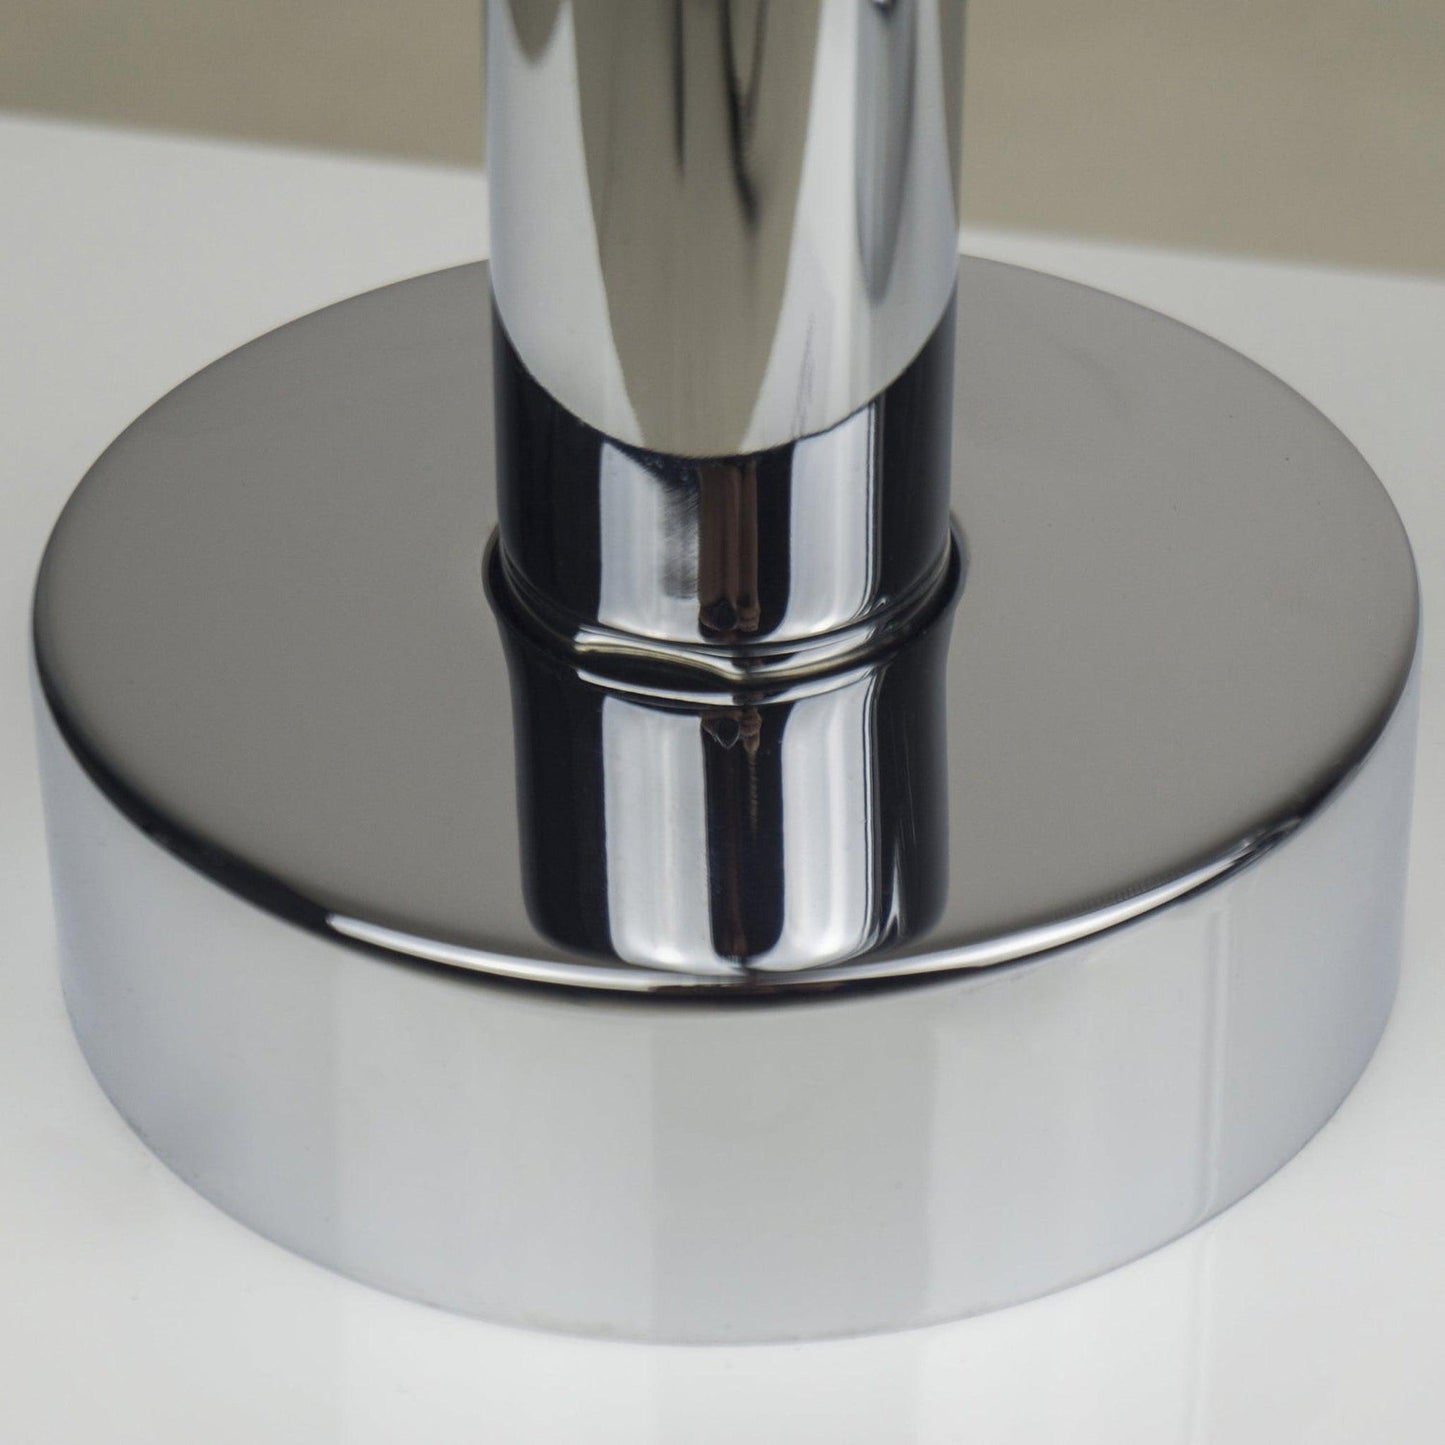 Eviva Alexa Chrome Freestanding Tub Filler Trim With Diverter and Hand Shower